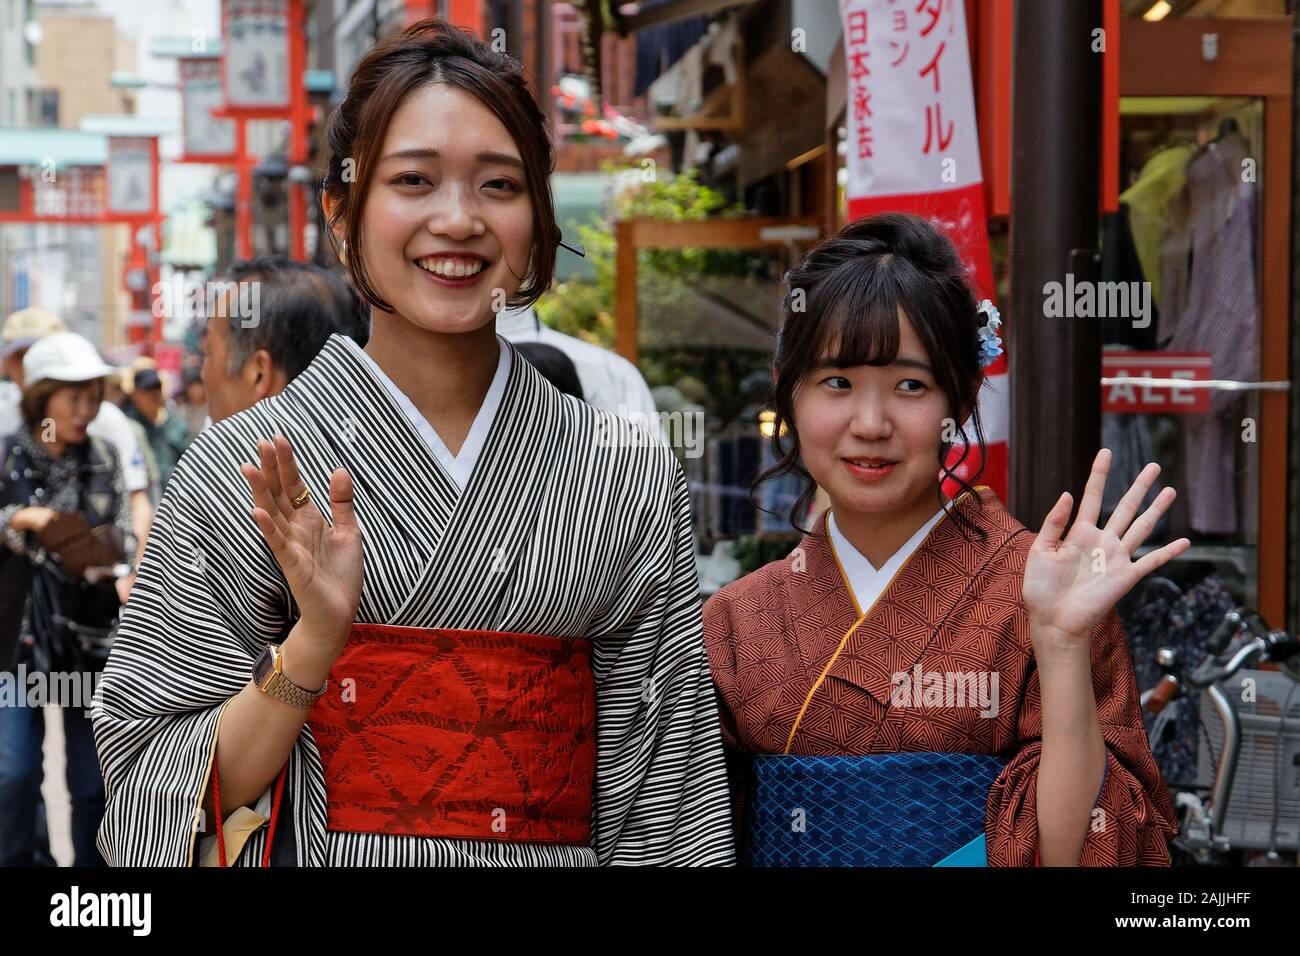 TOKYO, JAPAN, May 18, 2019 : Smiling young japanese women in kimono dressing. Stock Photo